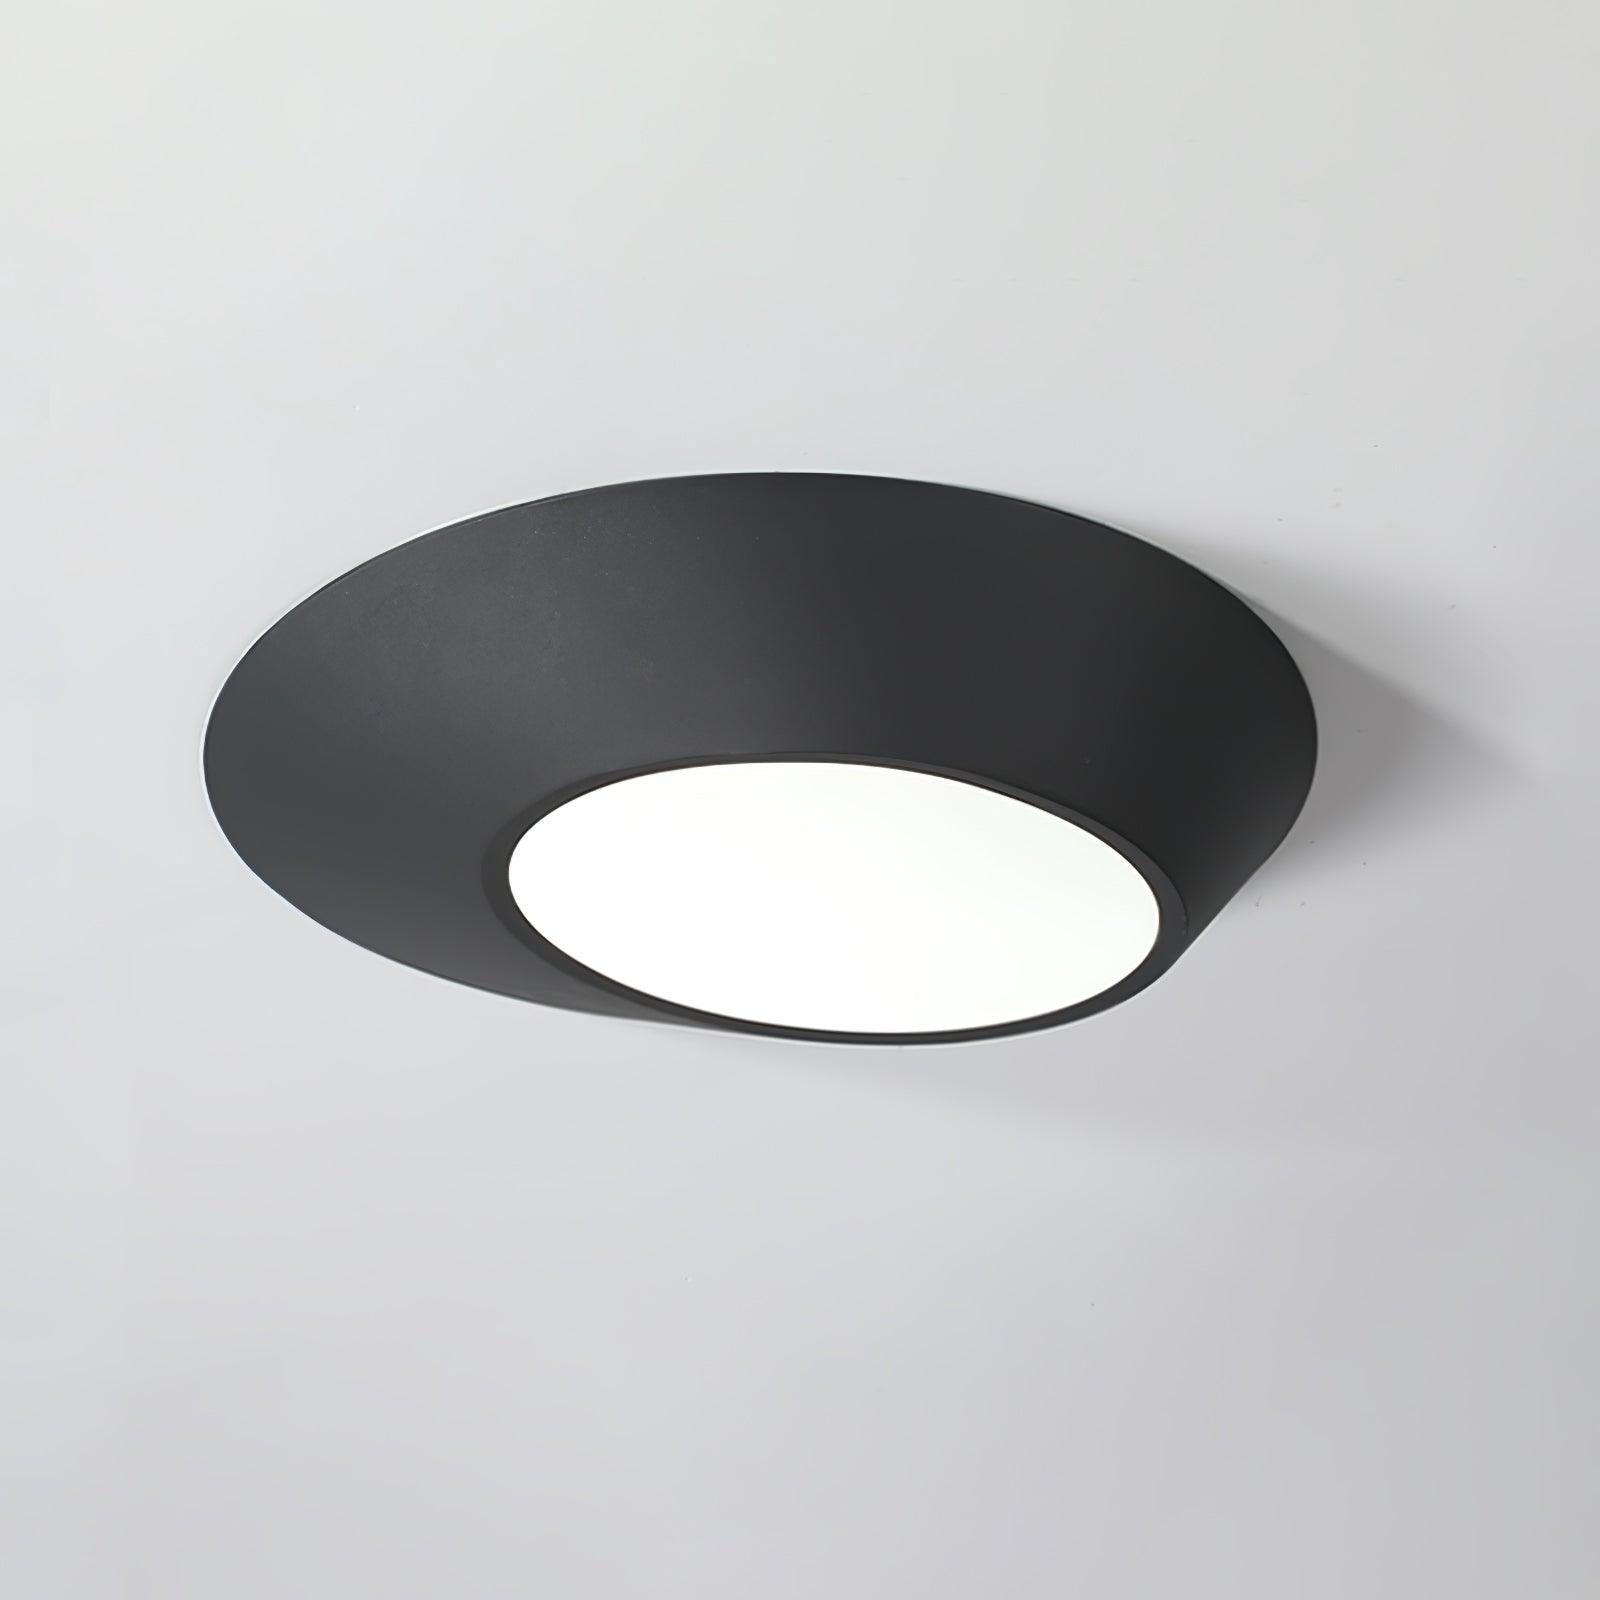 Black Cool Light Angled Ceiling Light, 19.7 inch diameter x 5.9 inch height (50cm x 15cm)